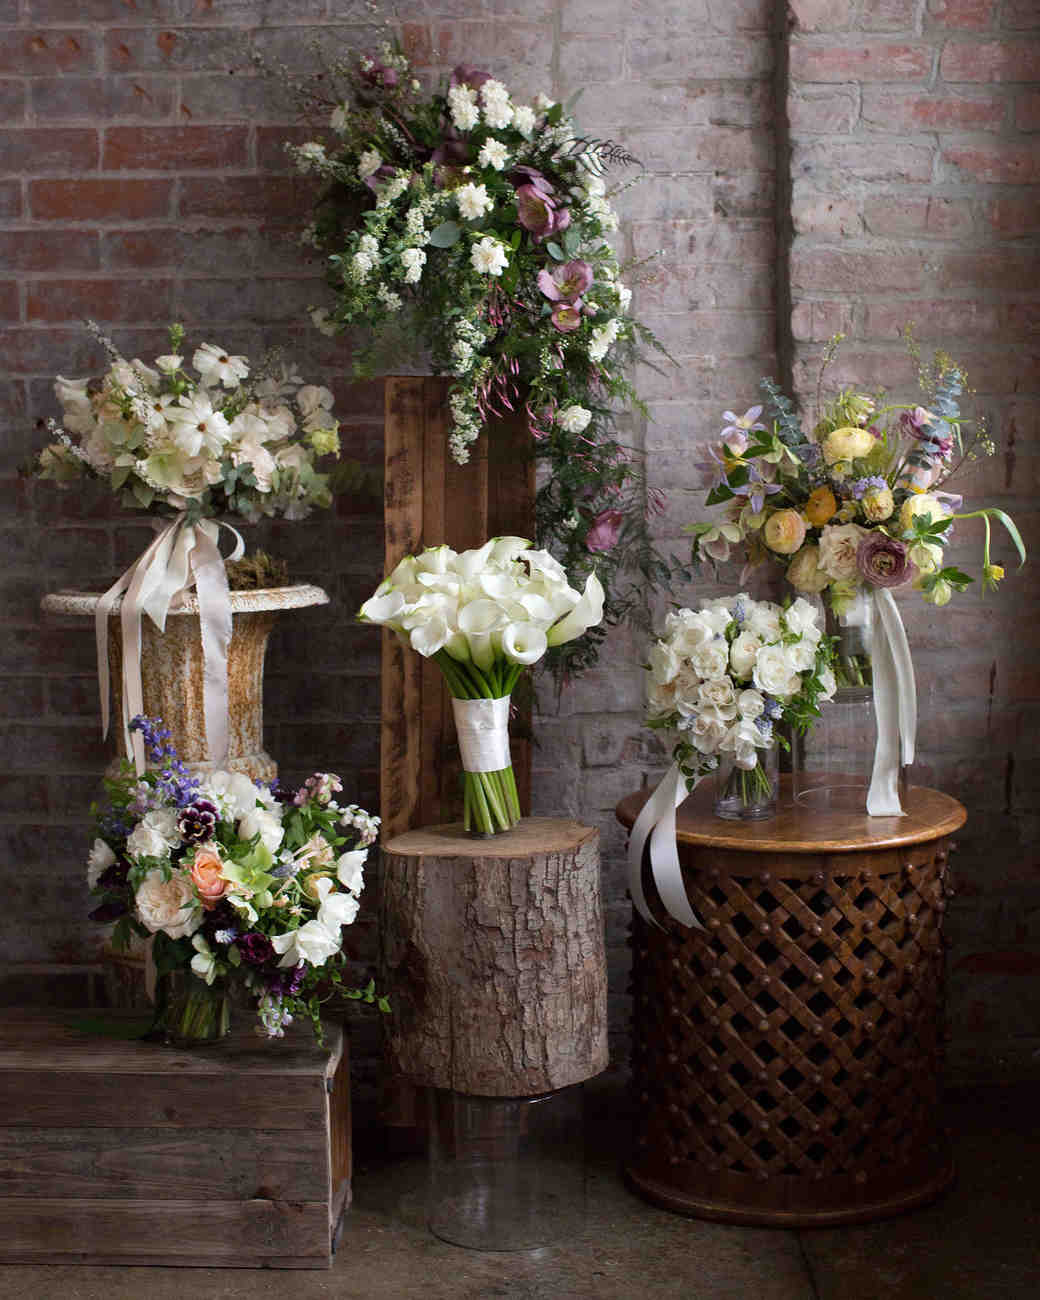 5 Florists Dream Up Meghan Markle's Wedding Bouquet ...